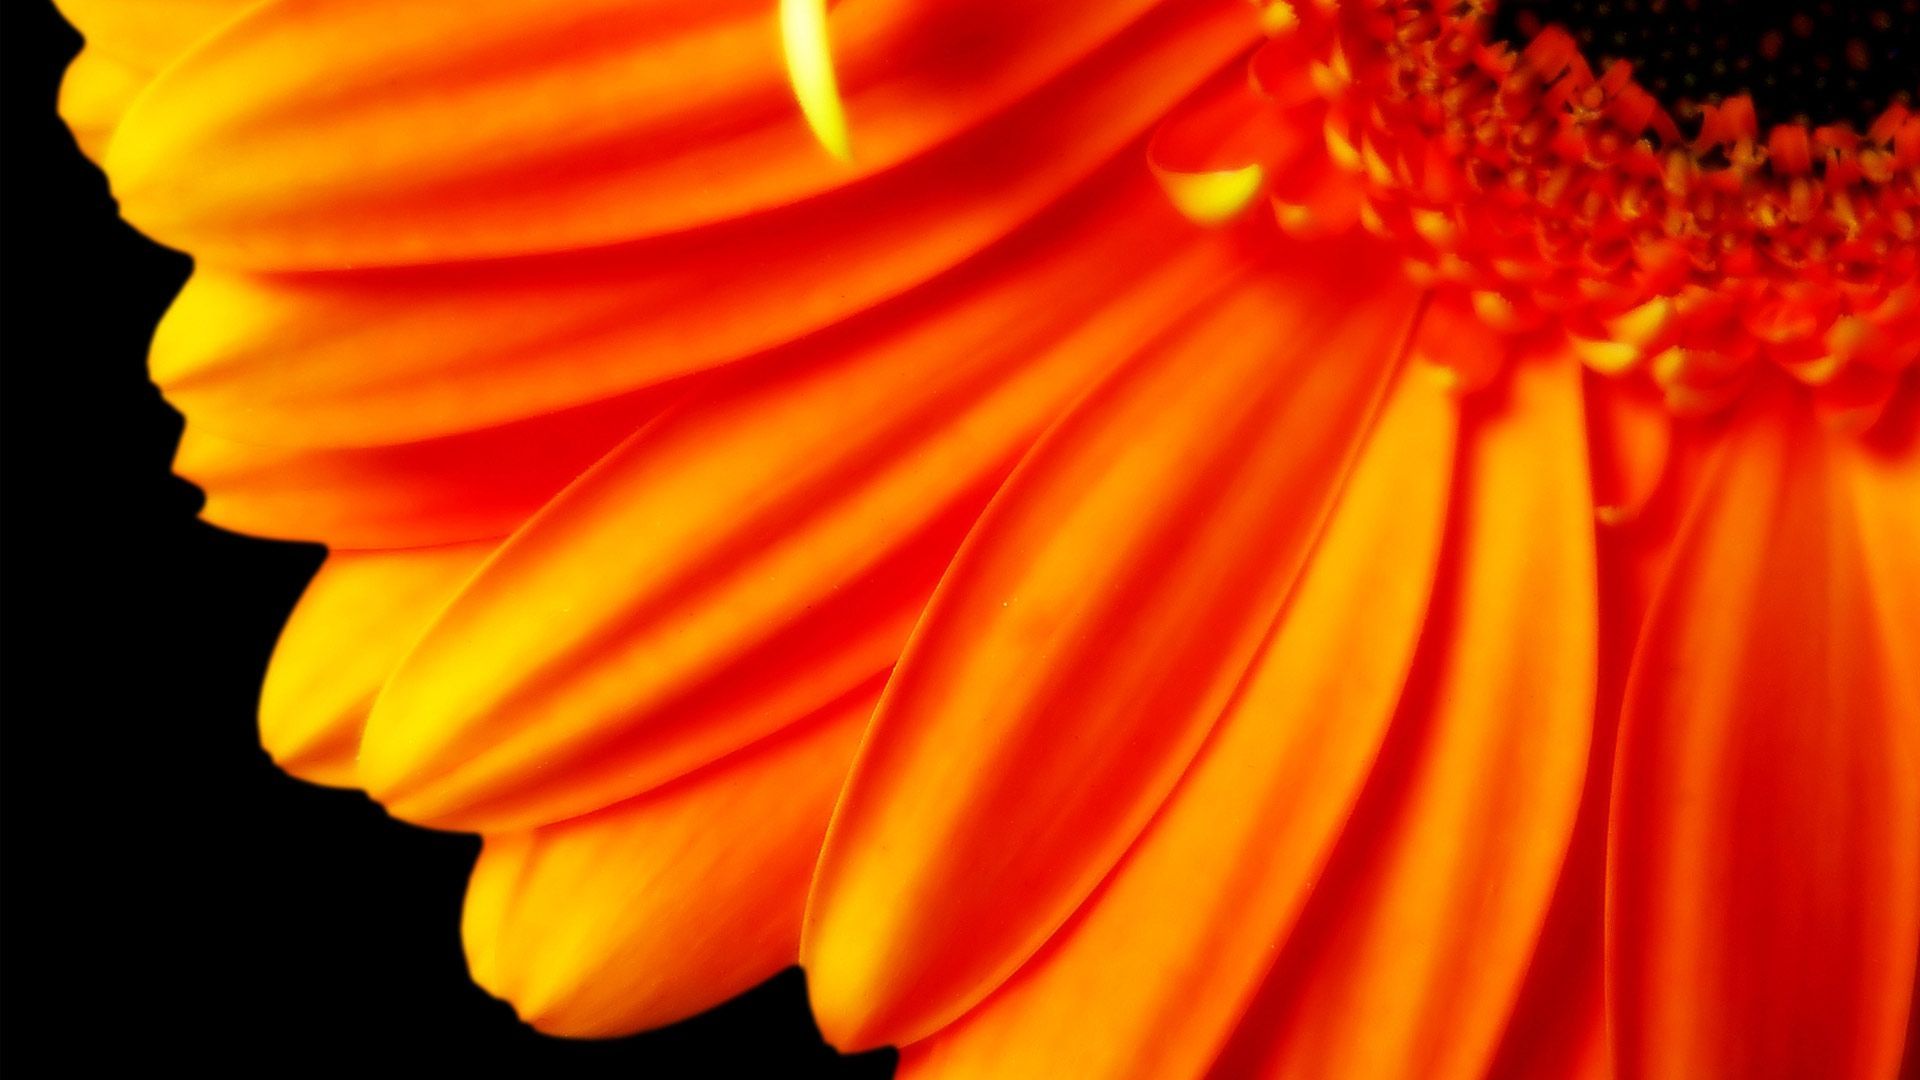 Pure Orange Flower 1080p Wallpapers | HD Wallpapers